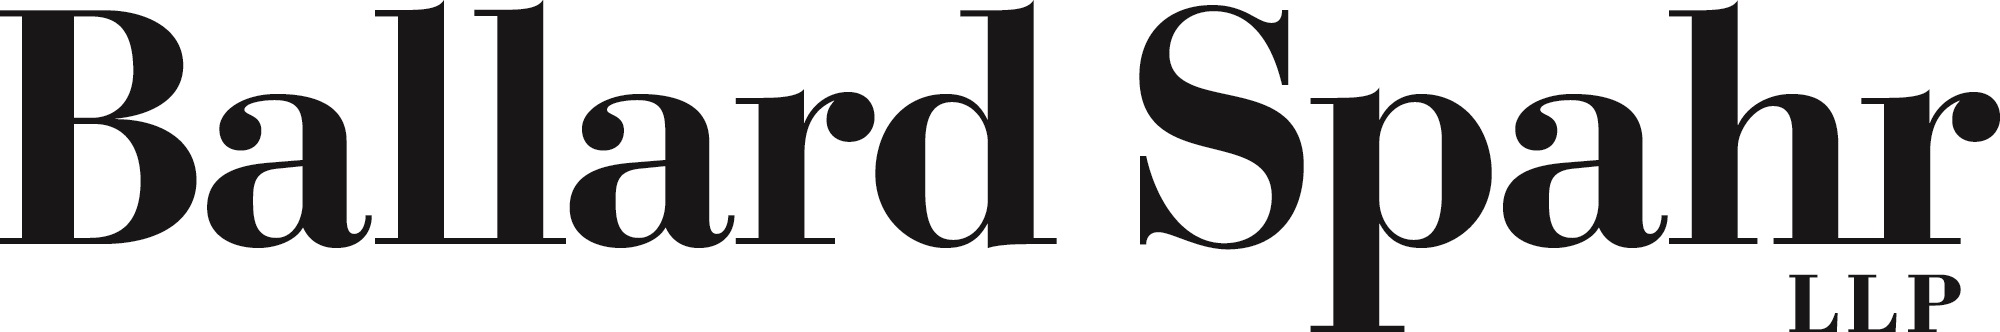 Ballard logo_small copy